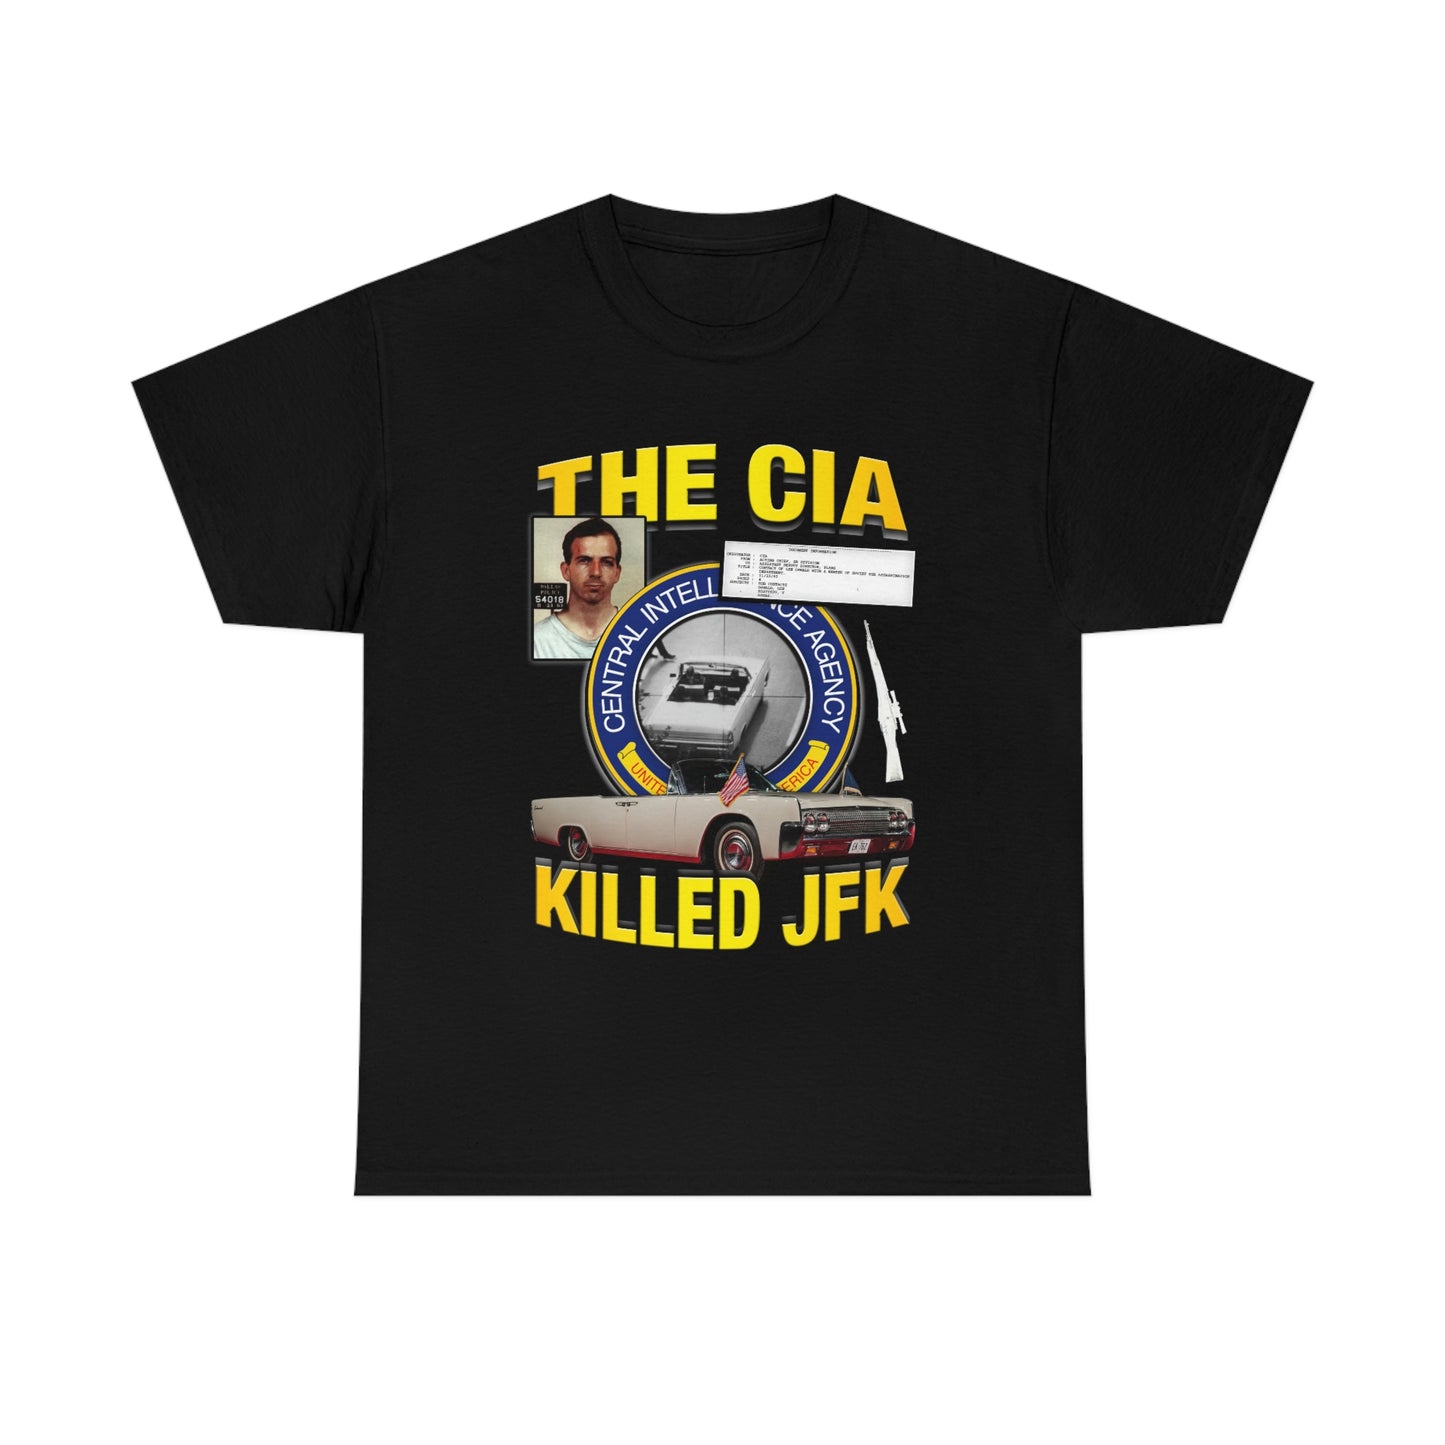 The C.I.A. Killed J.F.K.